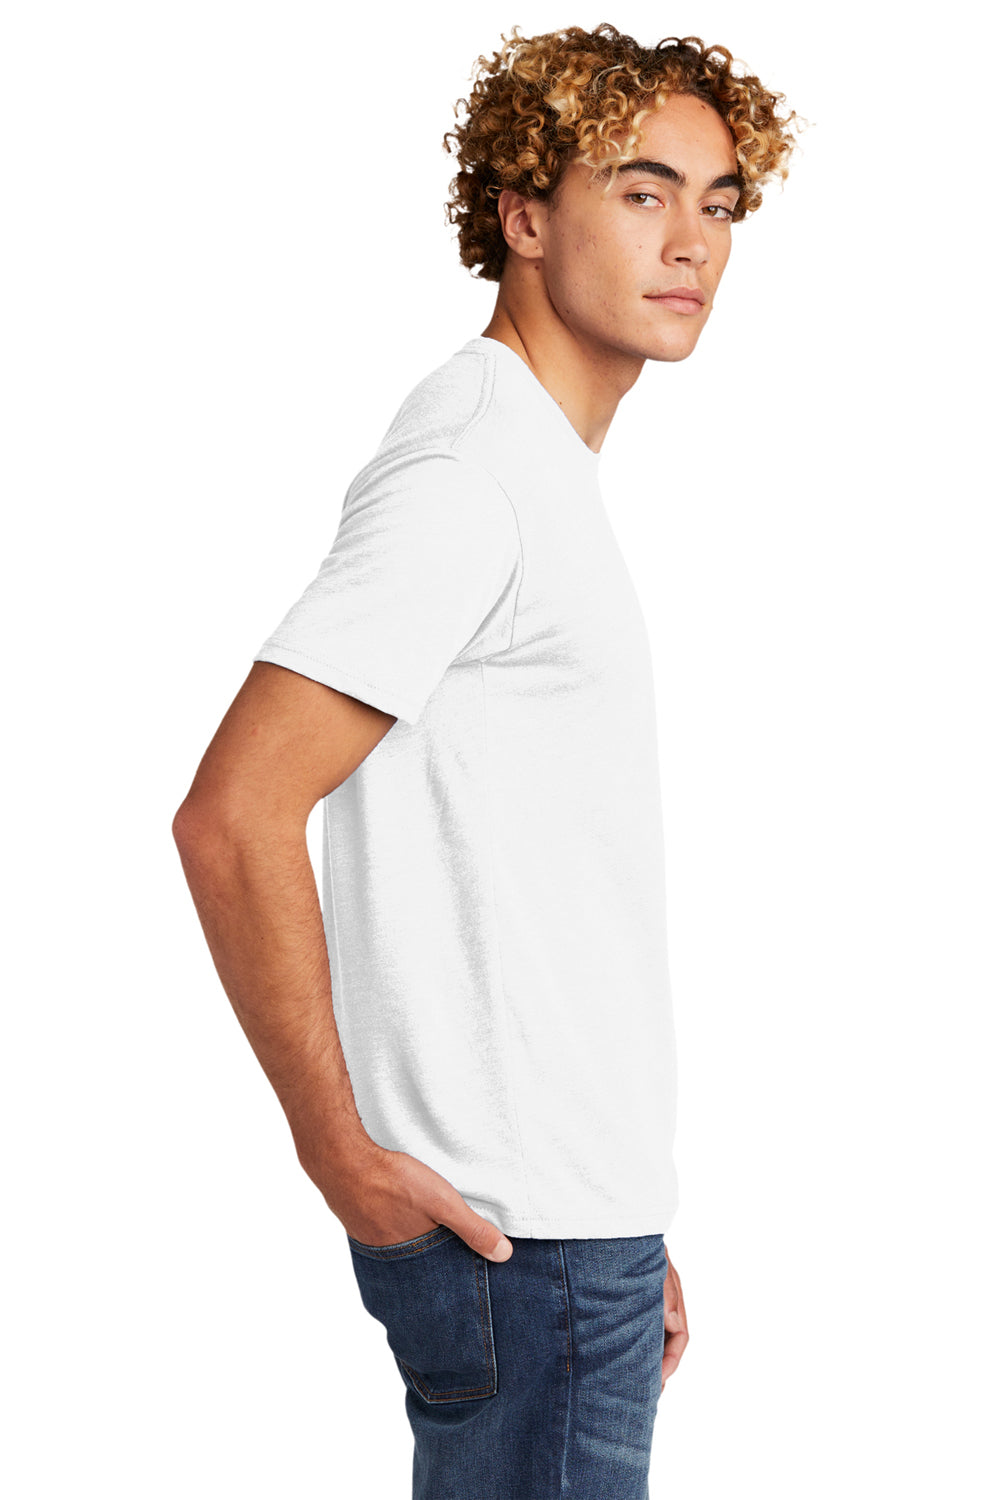 Next Level NL6010/6010 Mens Jersey Short Sleeve Crewneck T-Shirt White Side